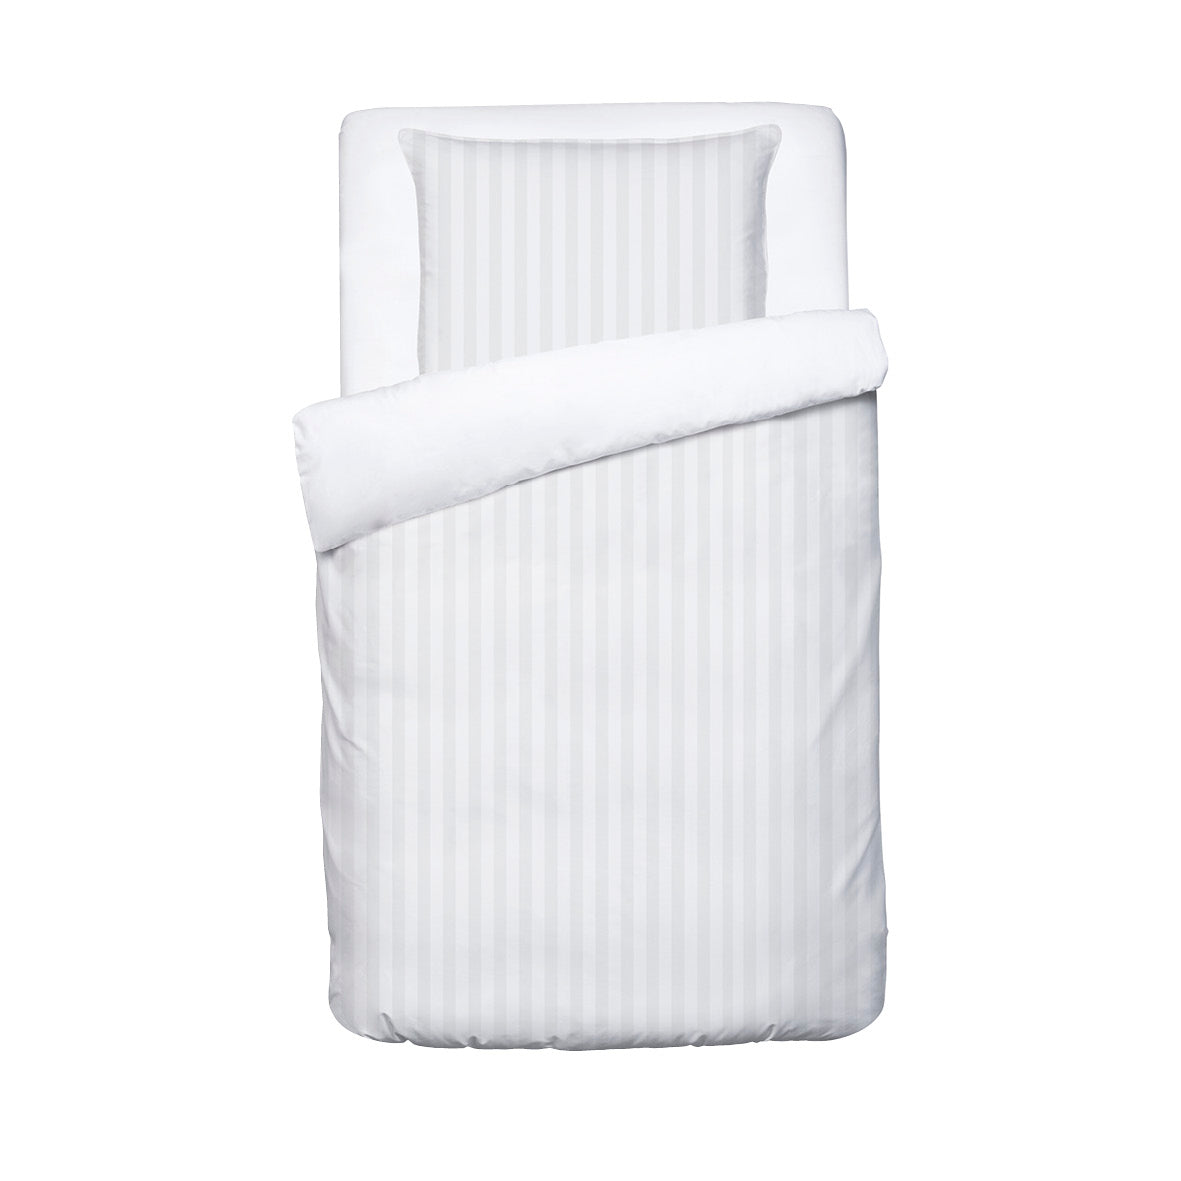 Duvet cover + pillowcase baby in cotton satin - Jacquard woven - Dobby stripe white